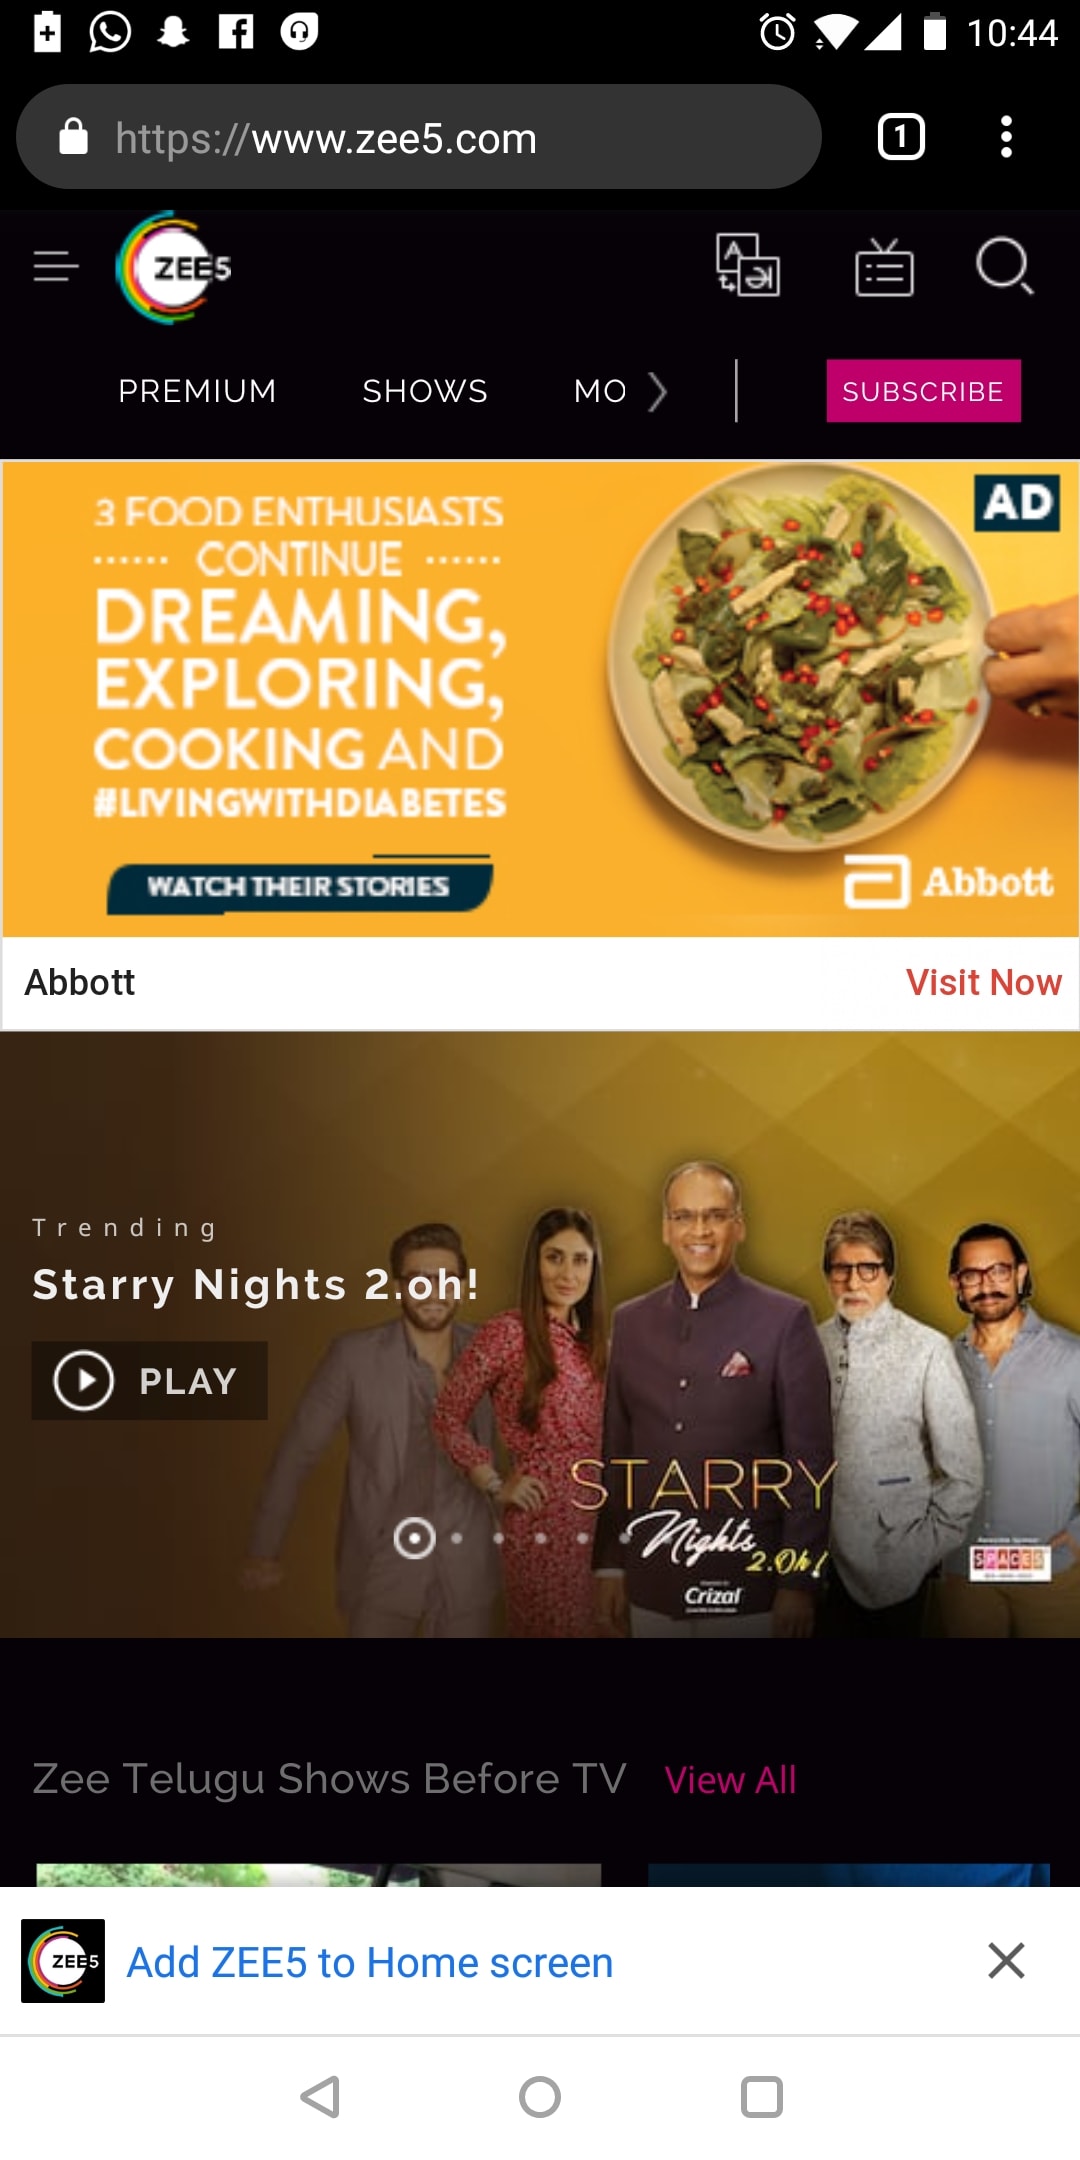 Zee5 App - Banner Advertising